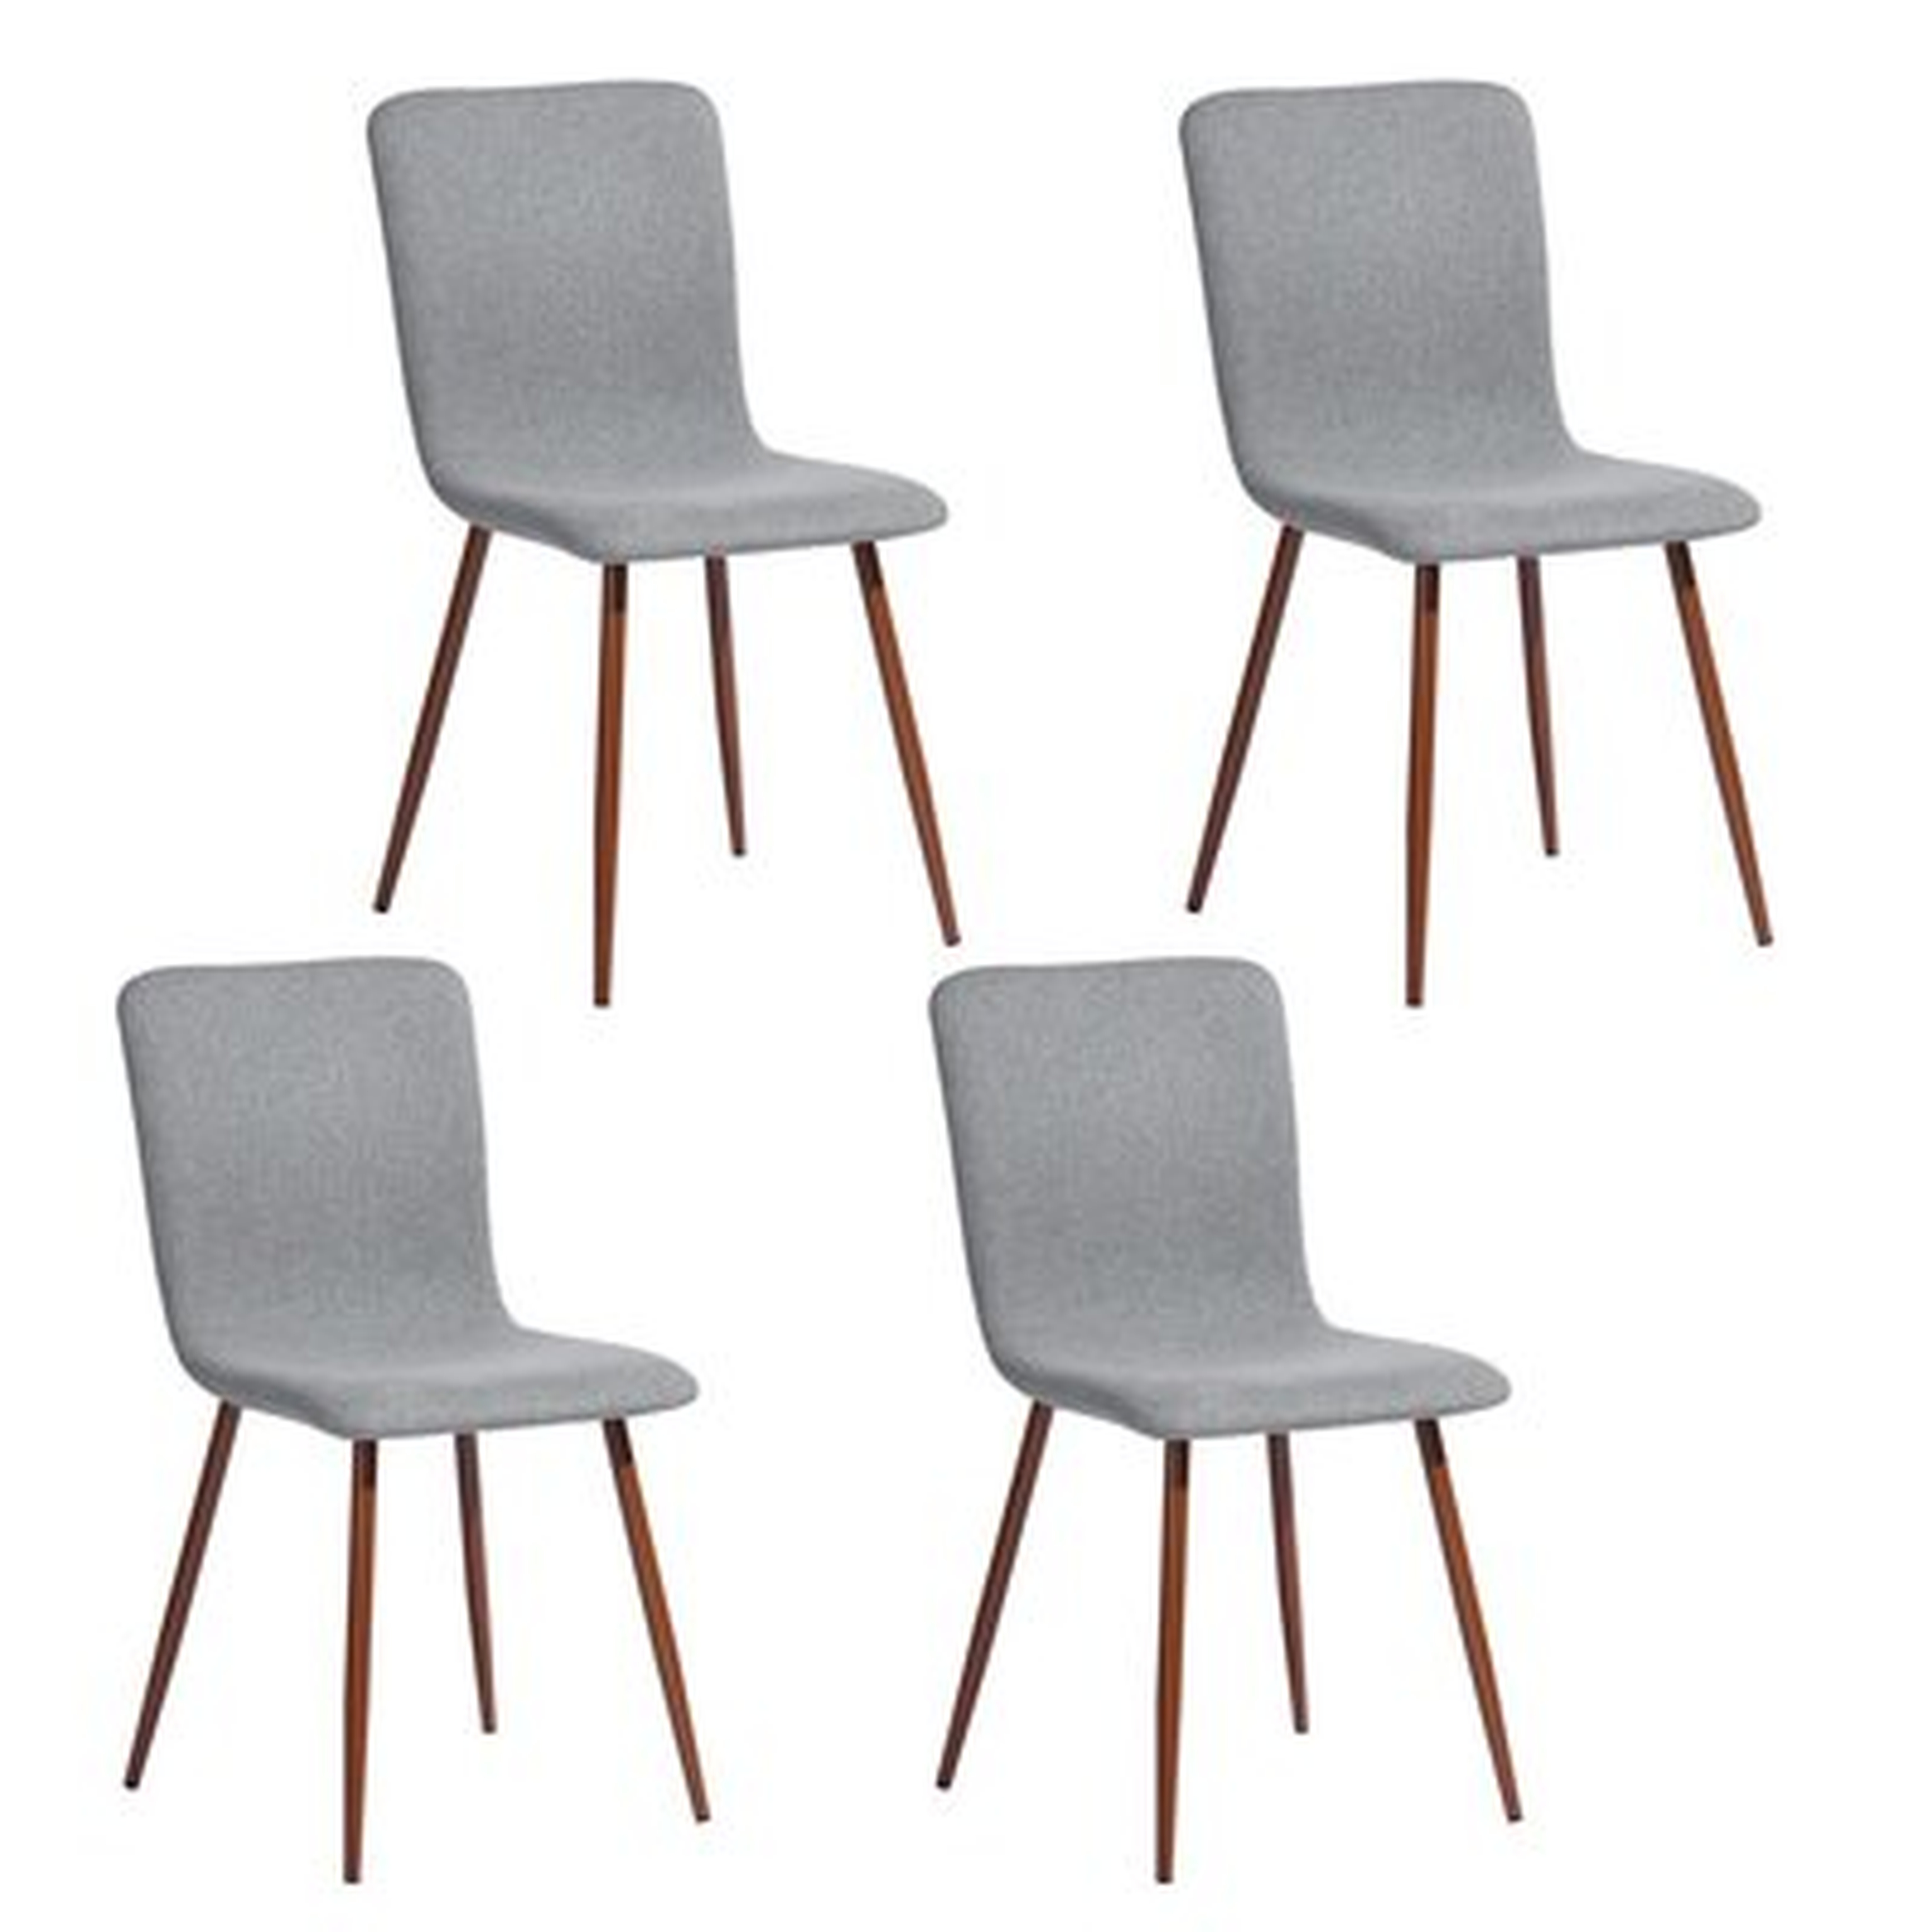 Wareham Upholstered Dining Chairs (set of 4) - Wayfair